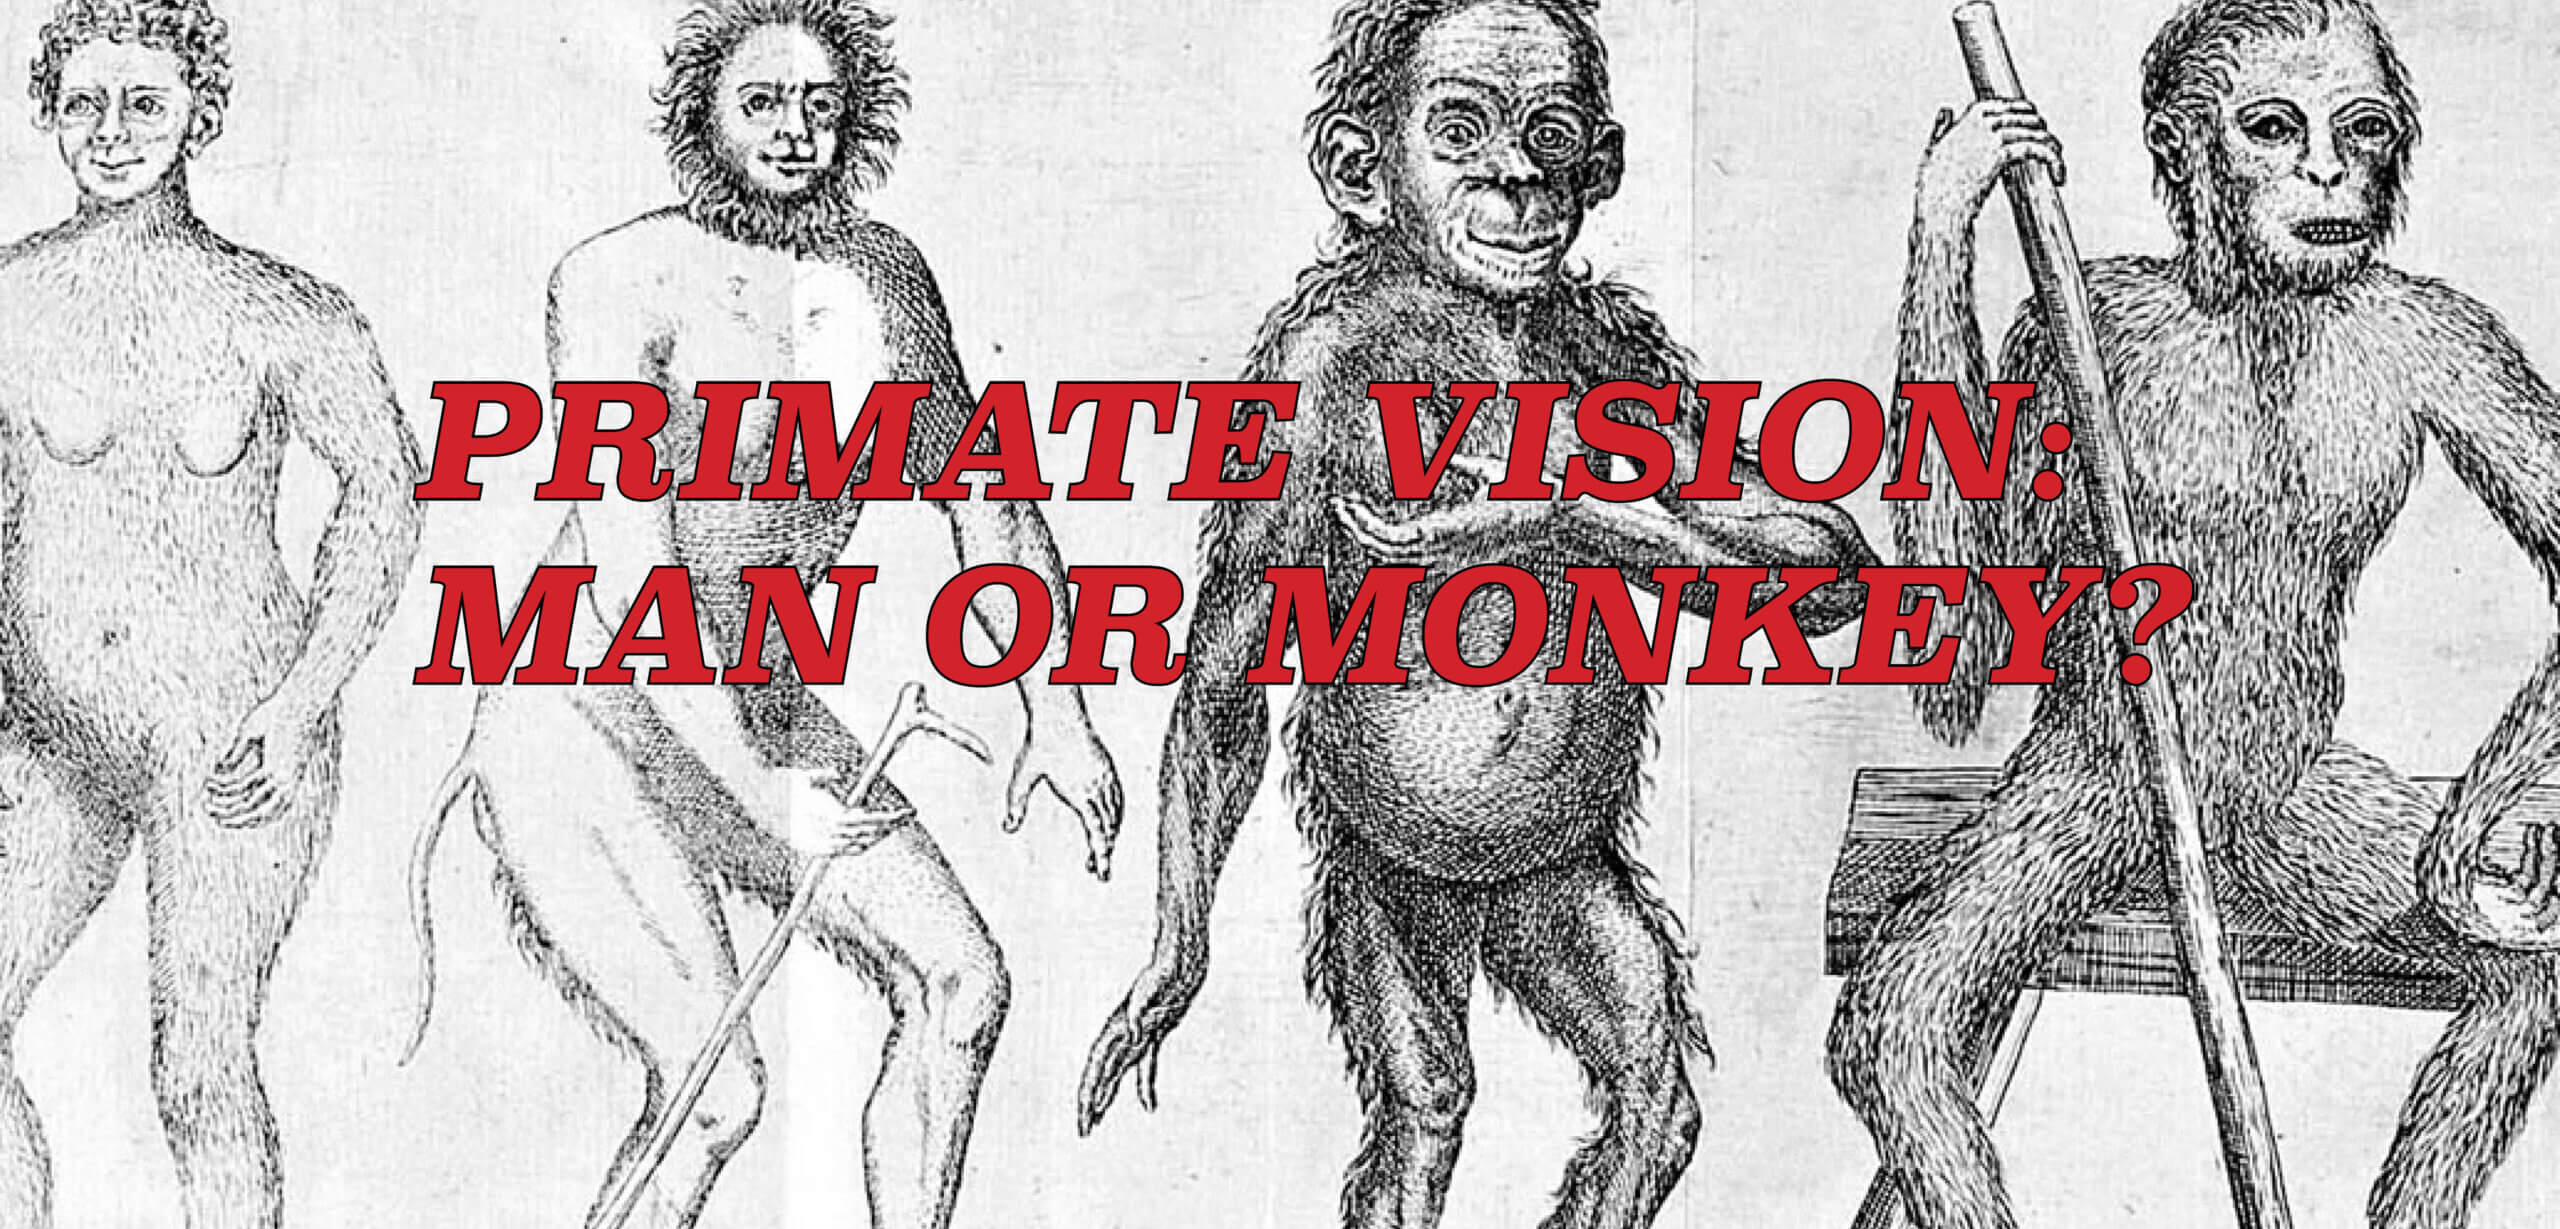 PRIMATE VISION: MAN OR MONKEY?